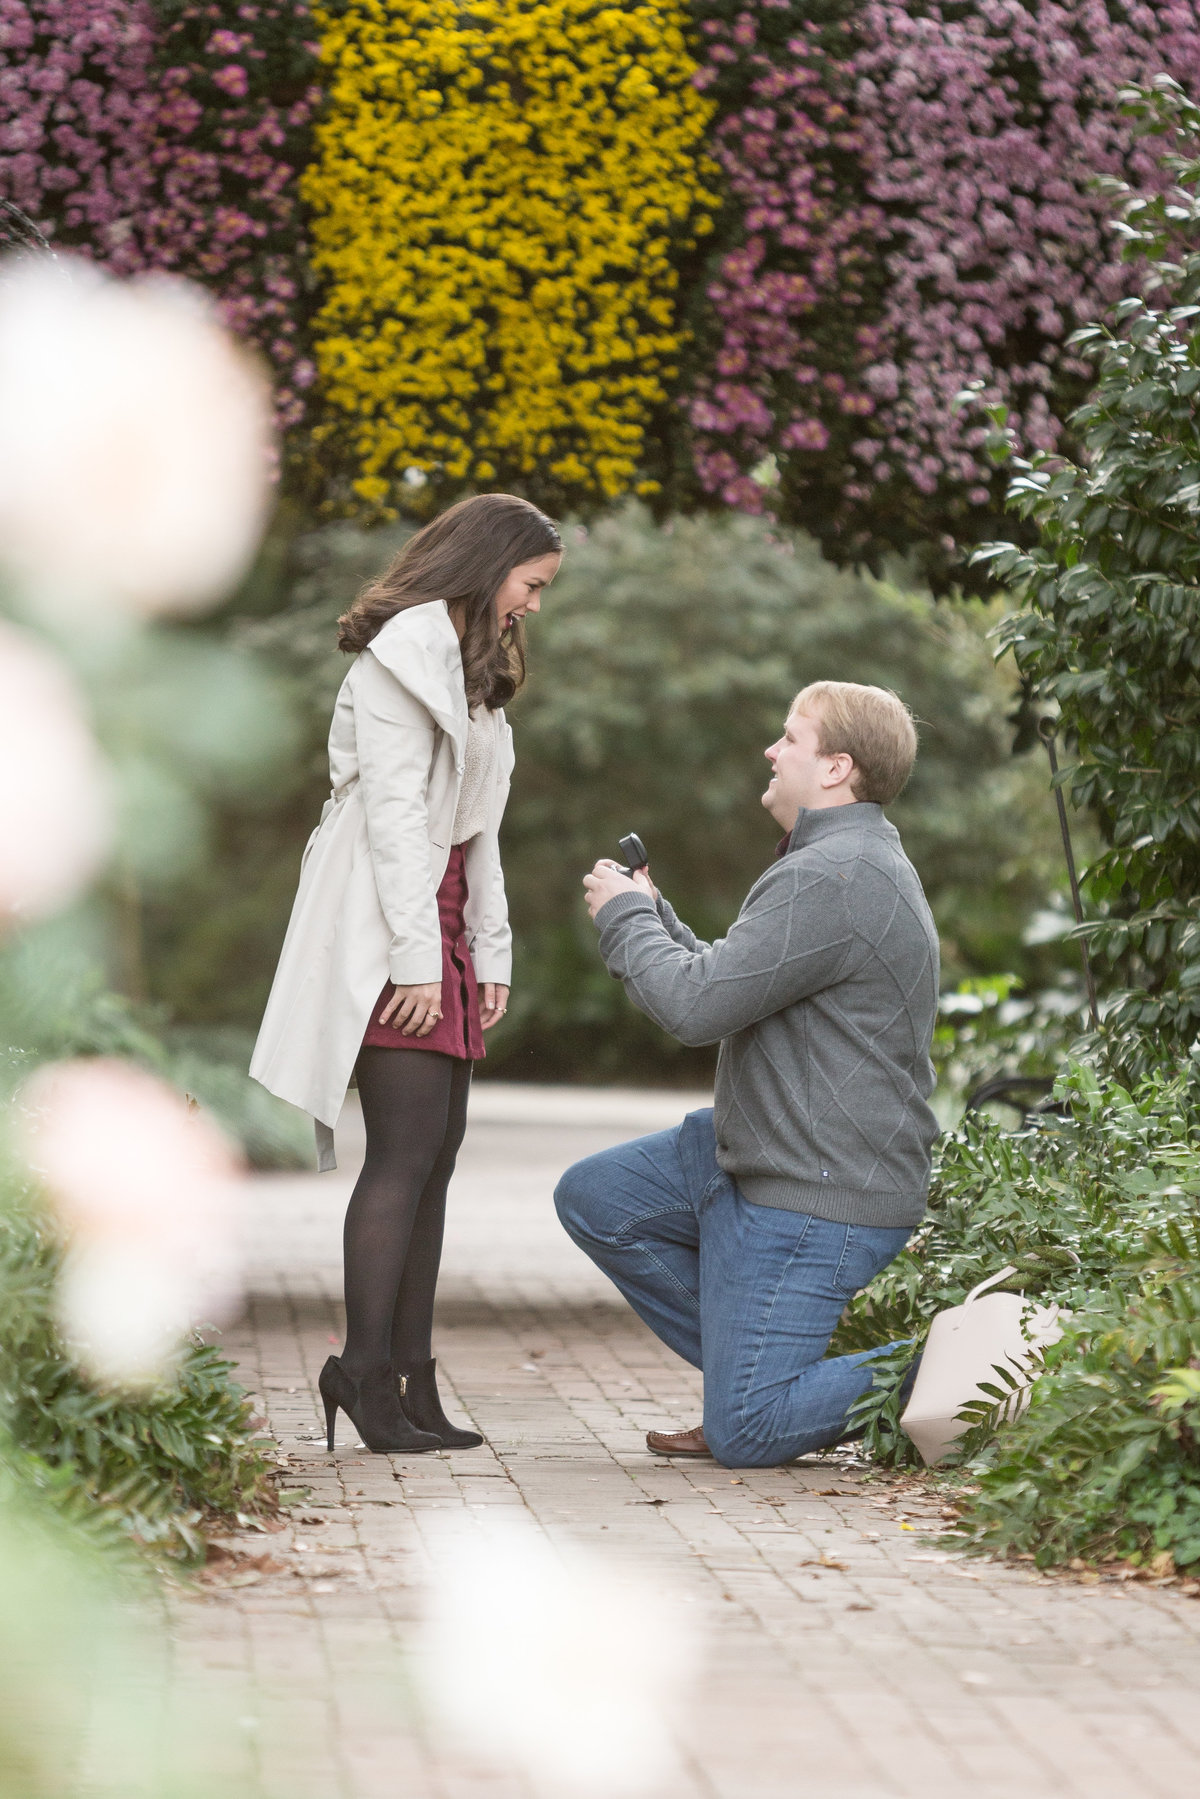 Adam surprises Kristen with an engagement ring at Bellingrath Gardens in Theodore, Alabama.